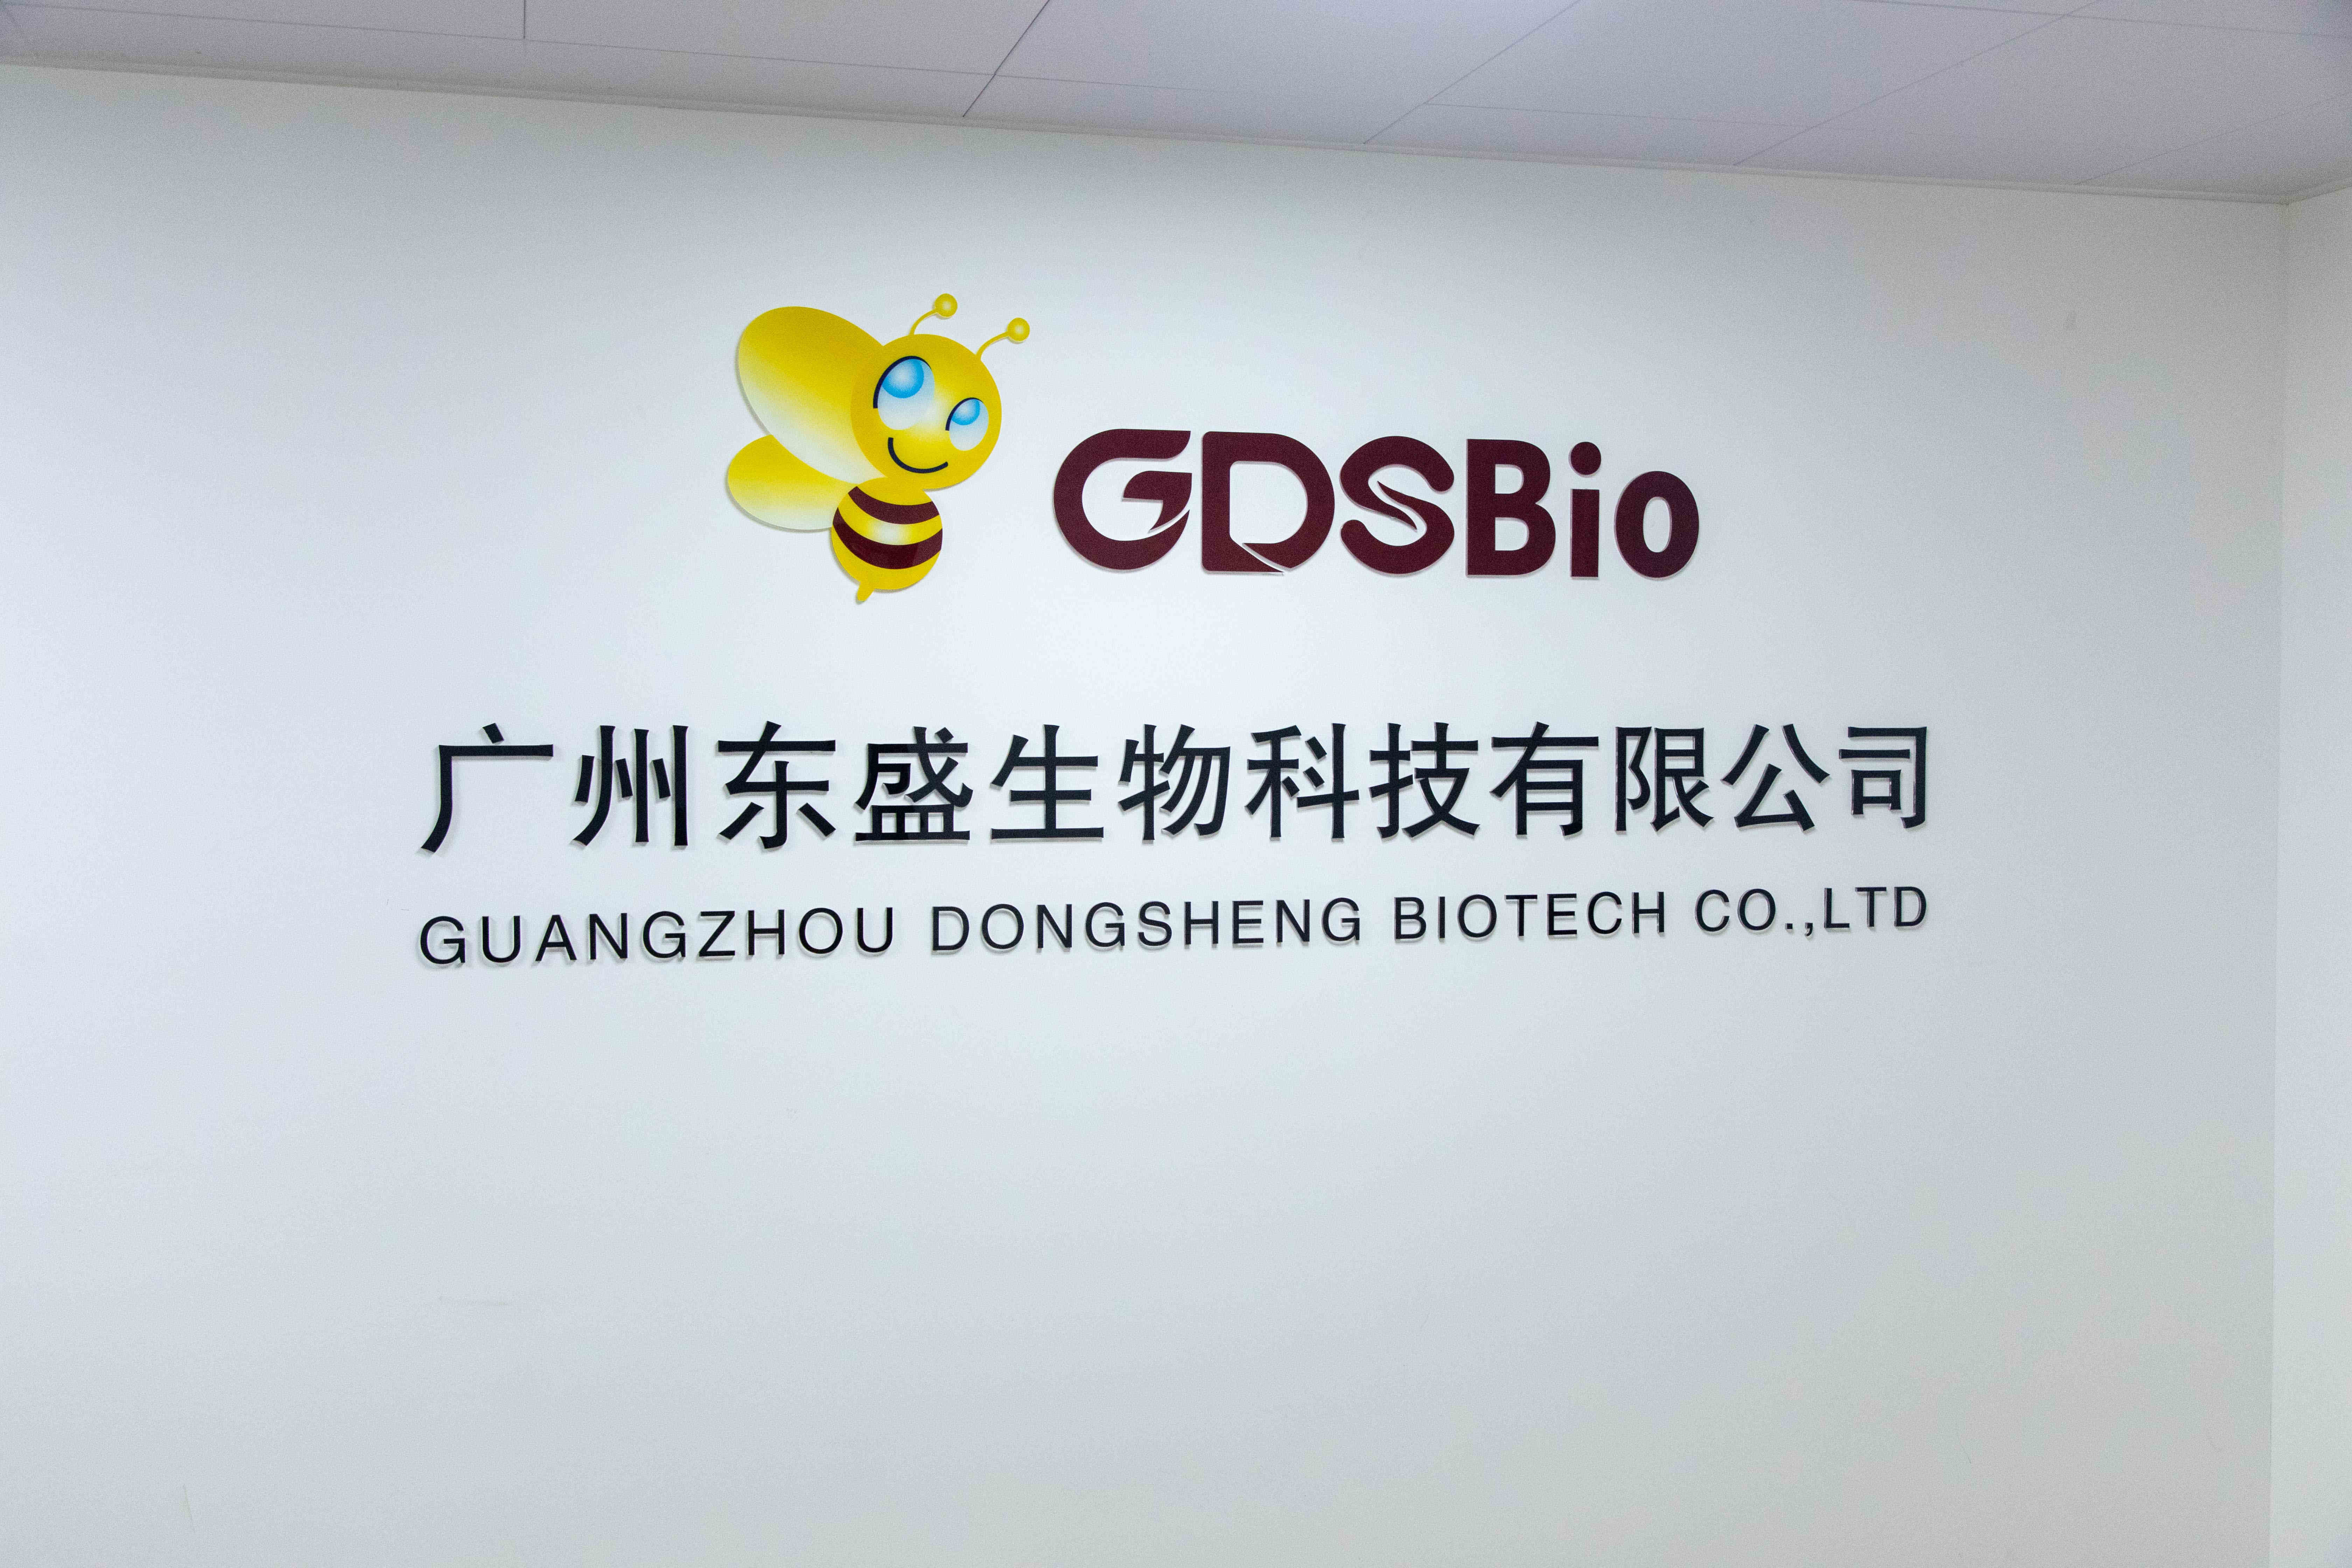 الصين Guangzhou Dongsheng Biotech Co., Ltd ملف الشركة